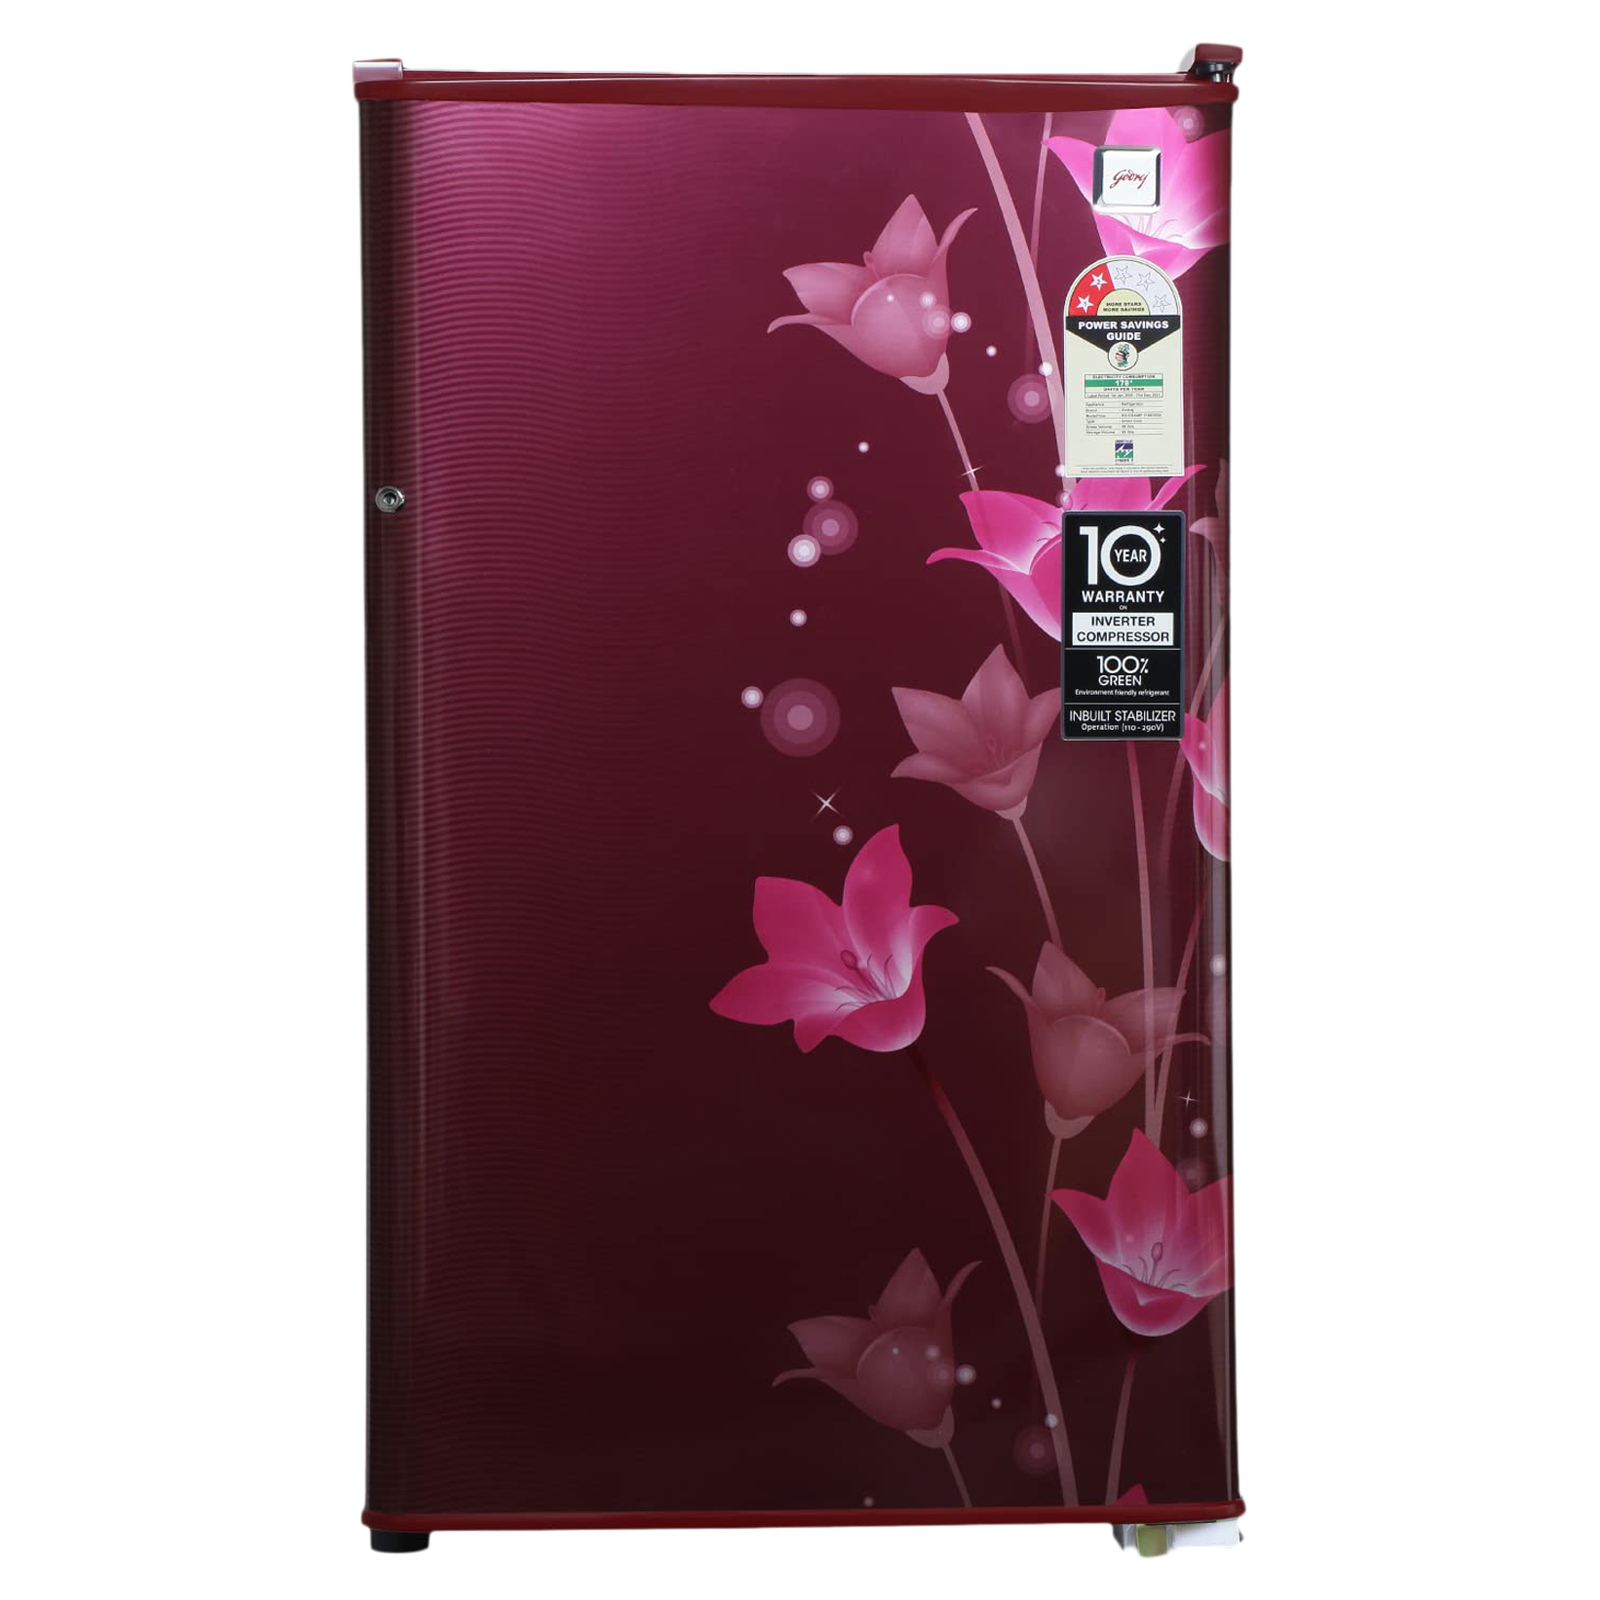 Godrej Champion 99 Liters 2 Star Direct Cool Single Door Refrigerator with Anti Bacterial Technology (RD CHAMP 114B23 EW, Magic Wine)_1